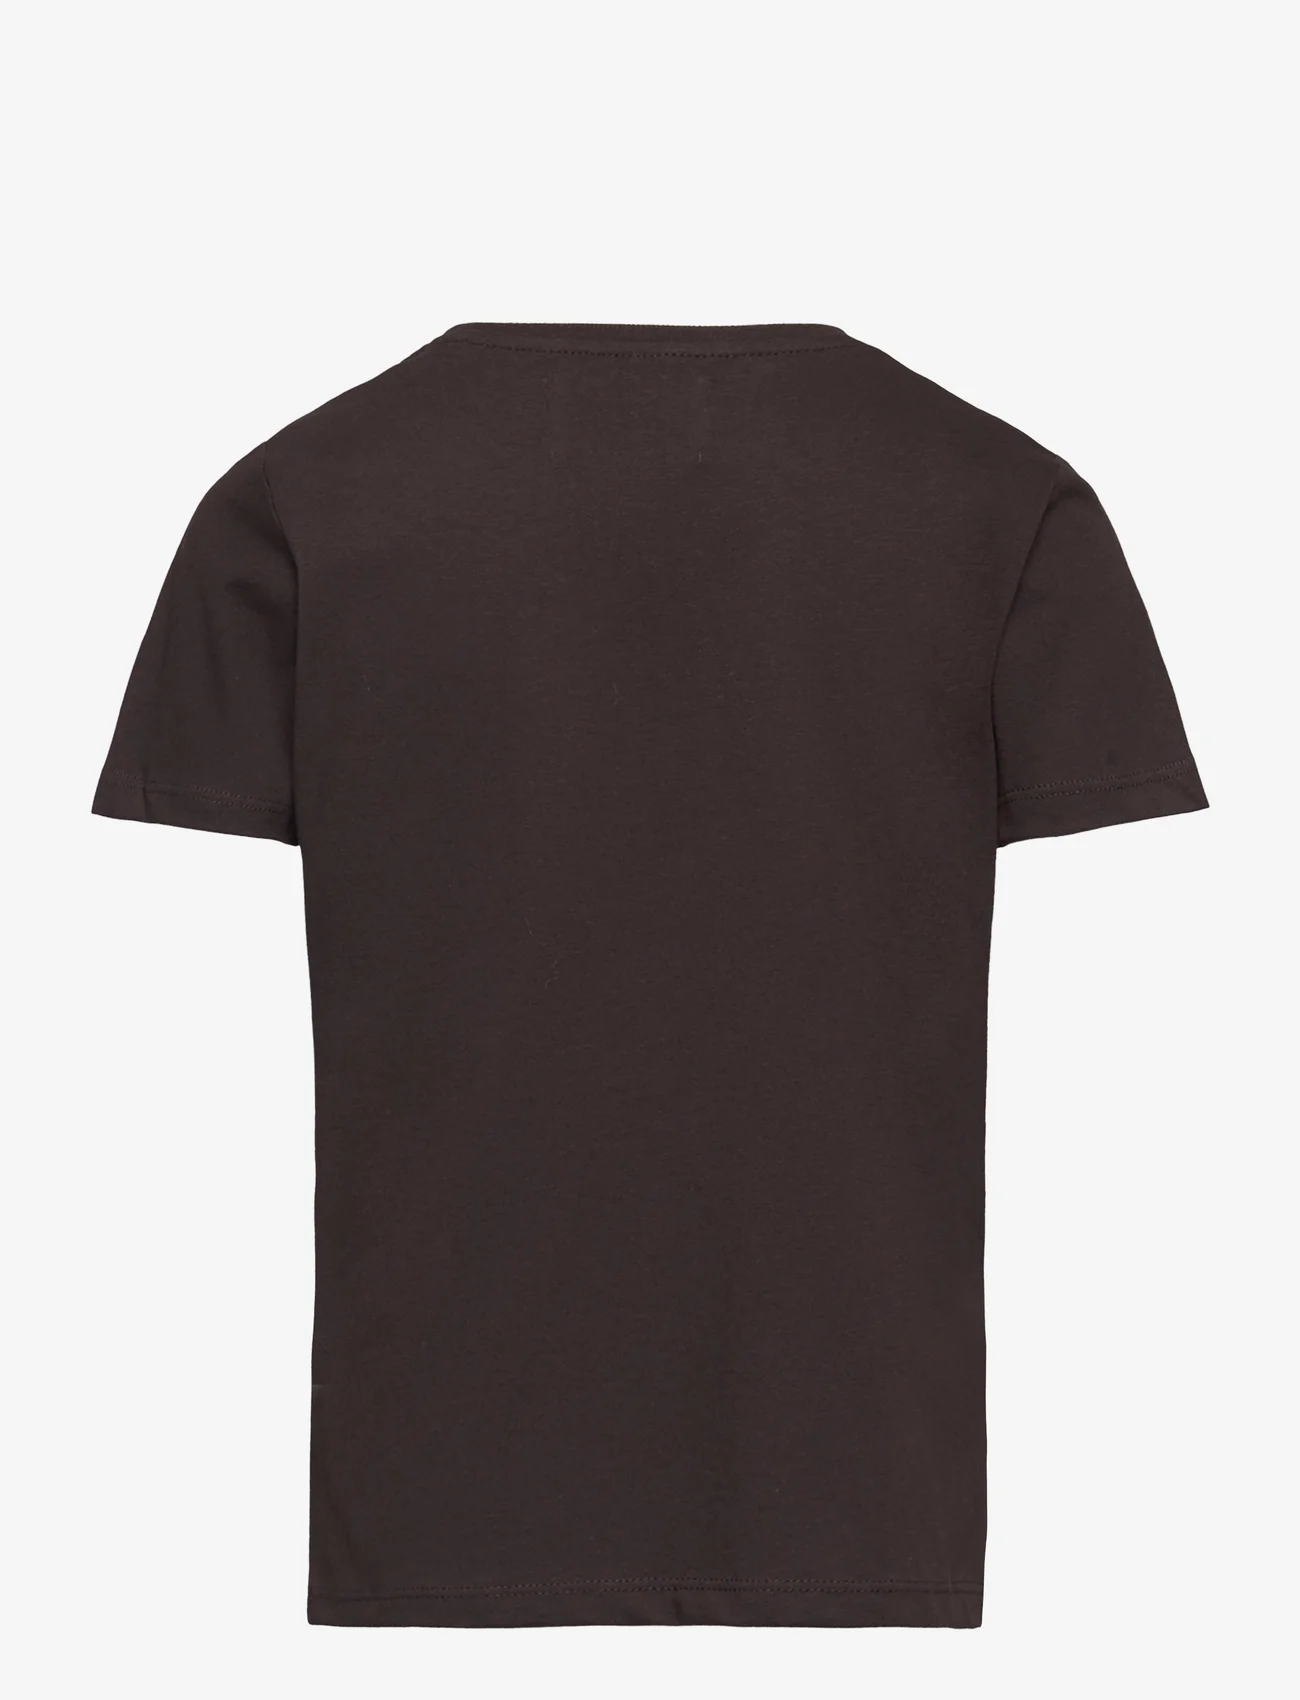 Wood Wood - Ola kids print T-shirt - short-sleeved - black coffee - 1